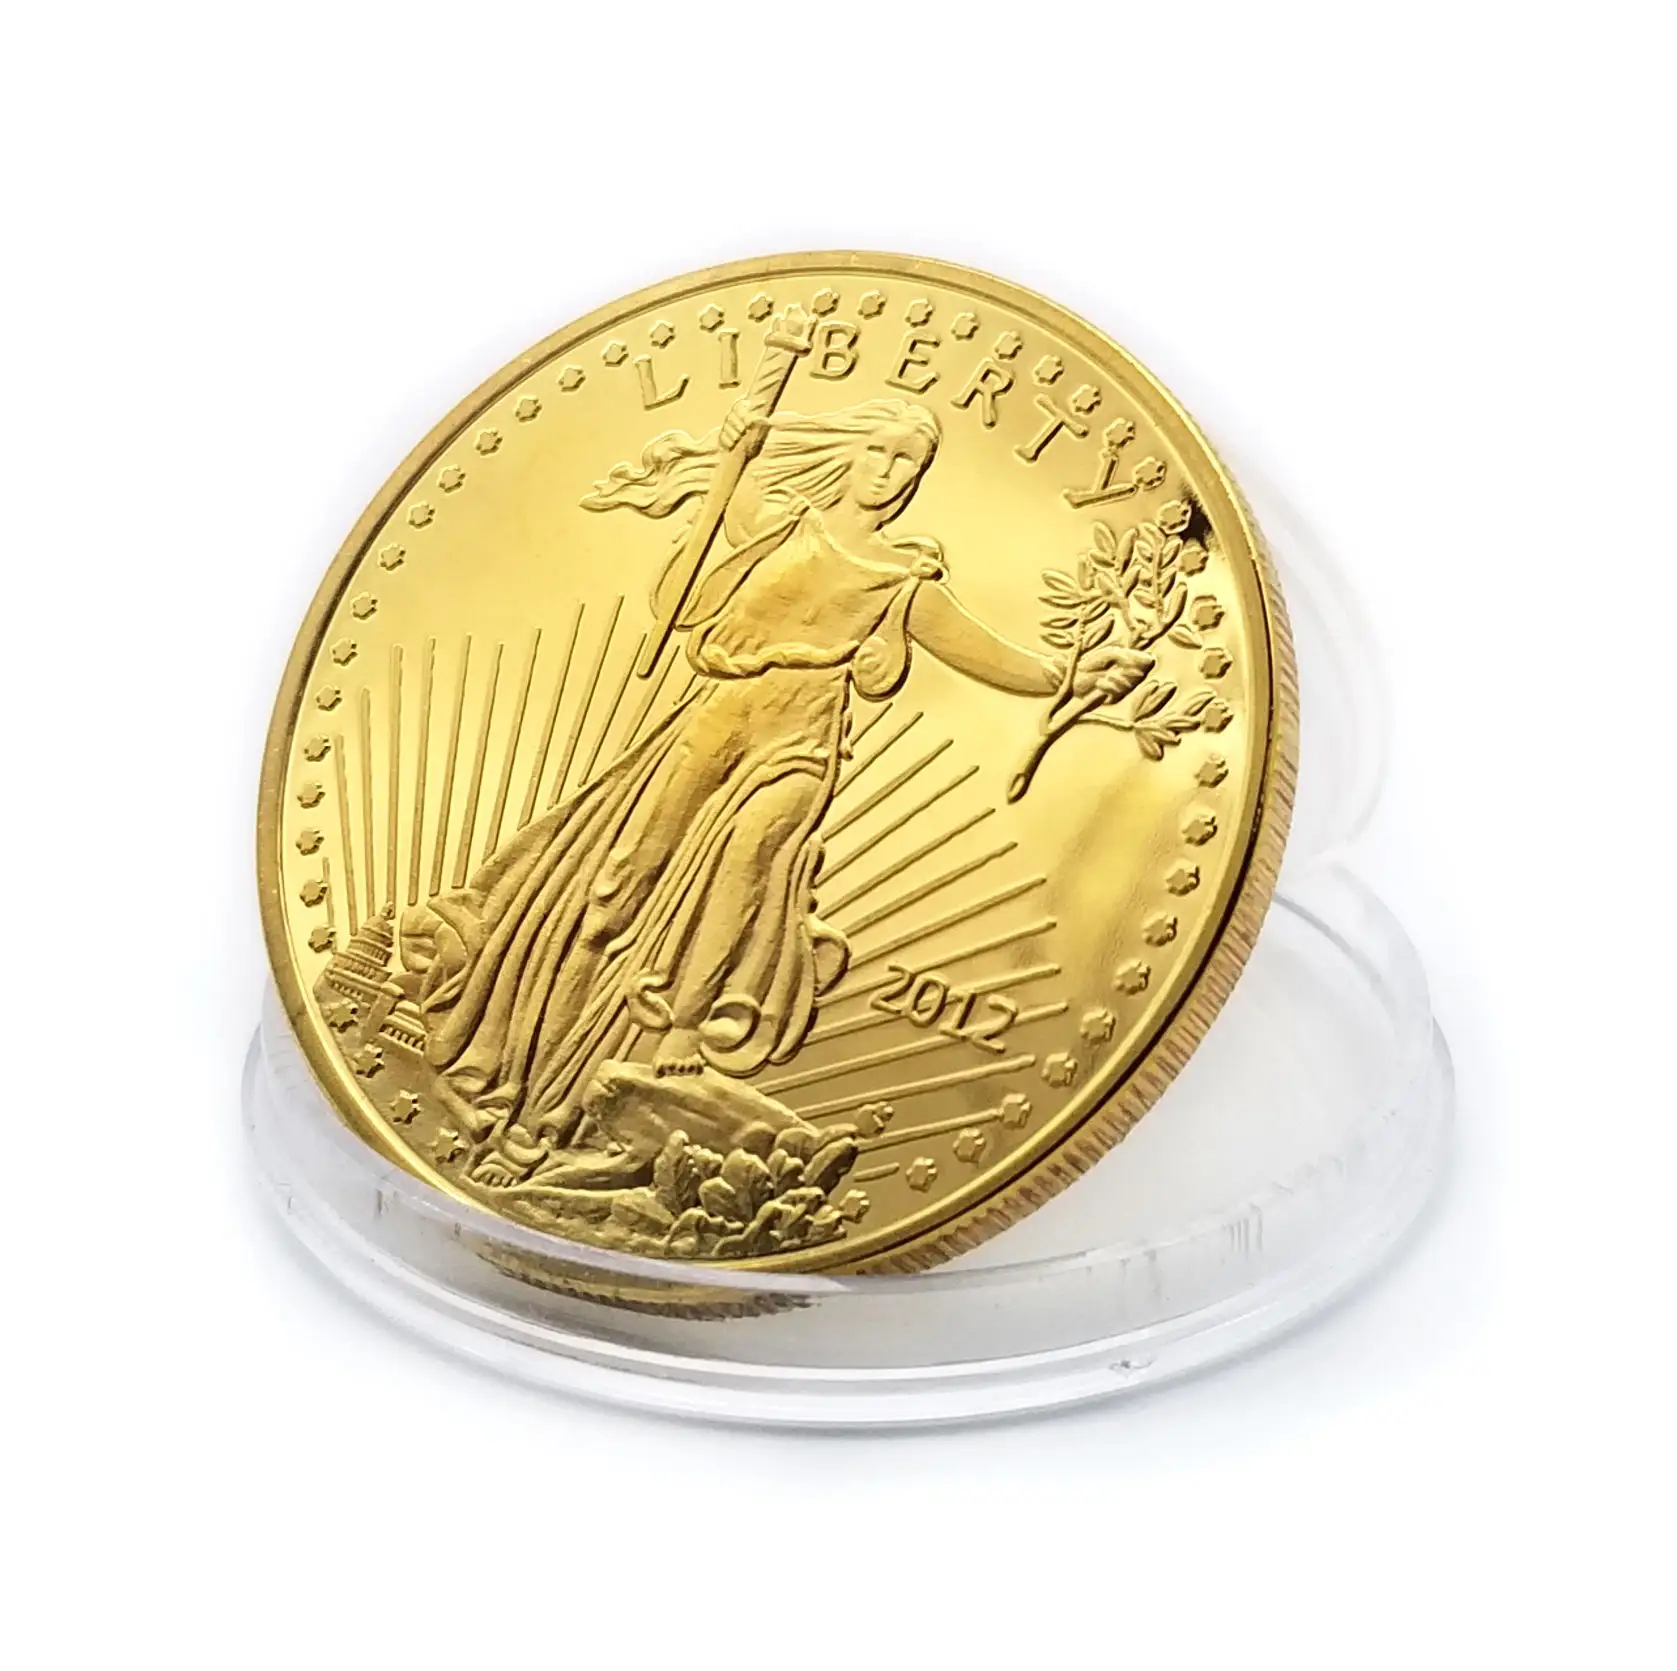 ओईएम क्वार्टर ईगल 1 ऑउंस सोने का स्मारक प्रतिकृति सिक्का अमेरिकी टंगस्टन सोना चांदी डबल ईगल यूएस सिक्का